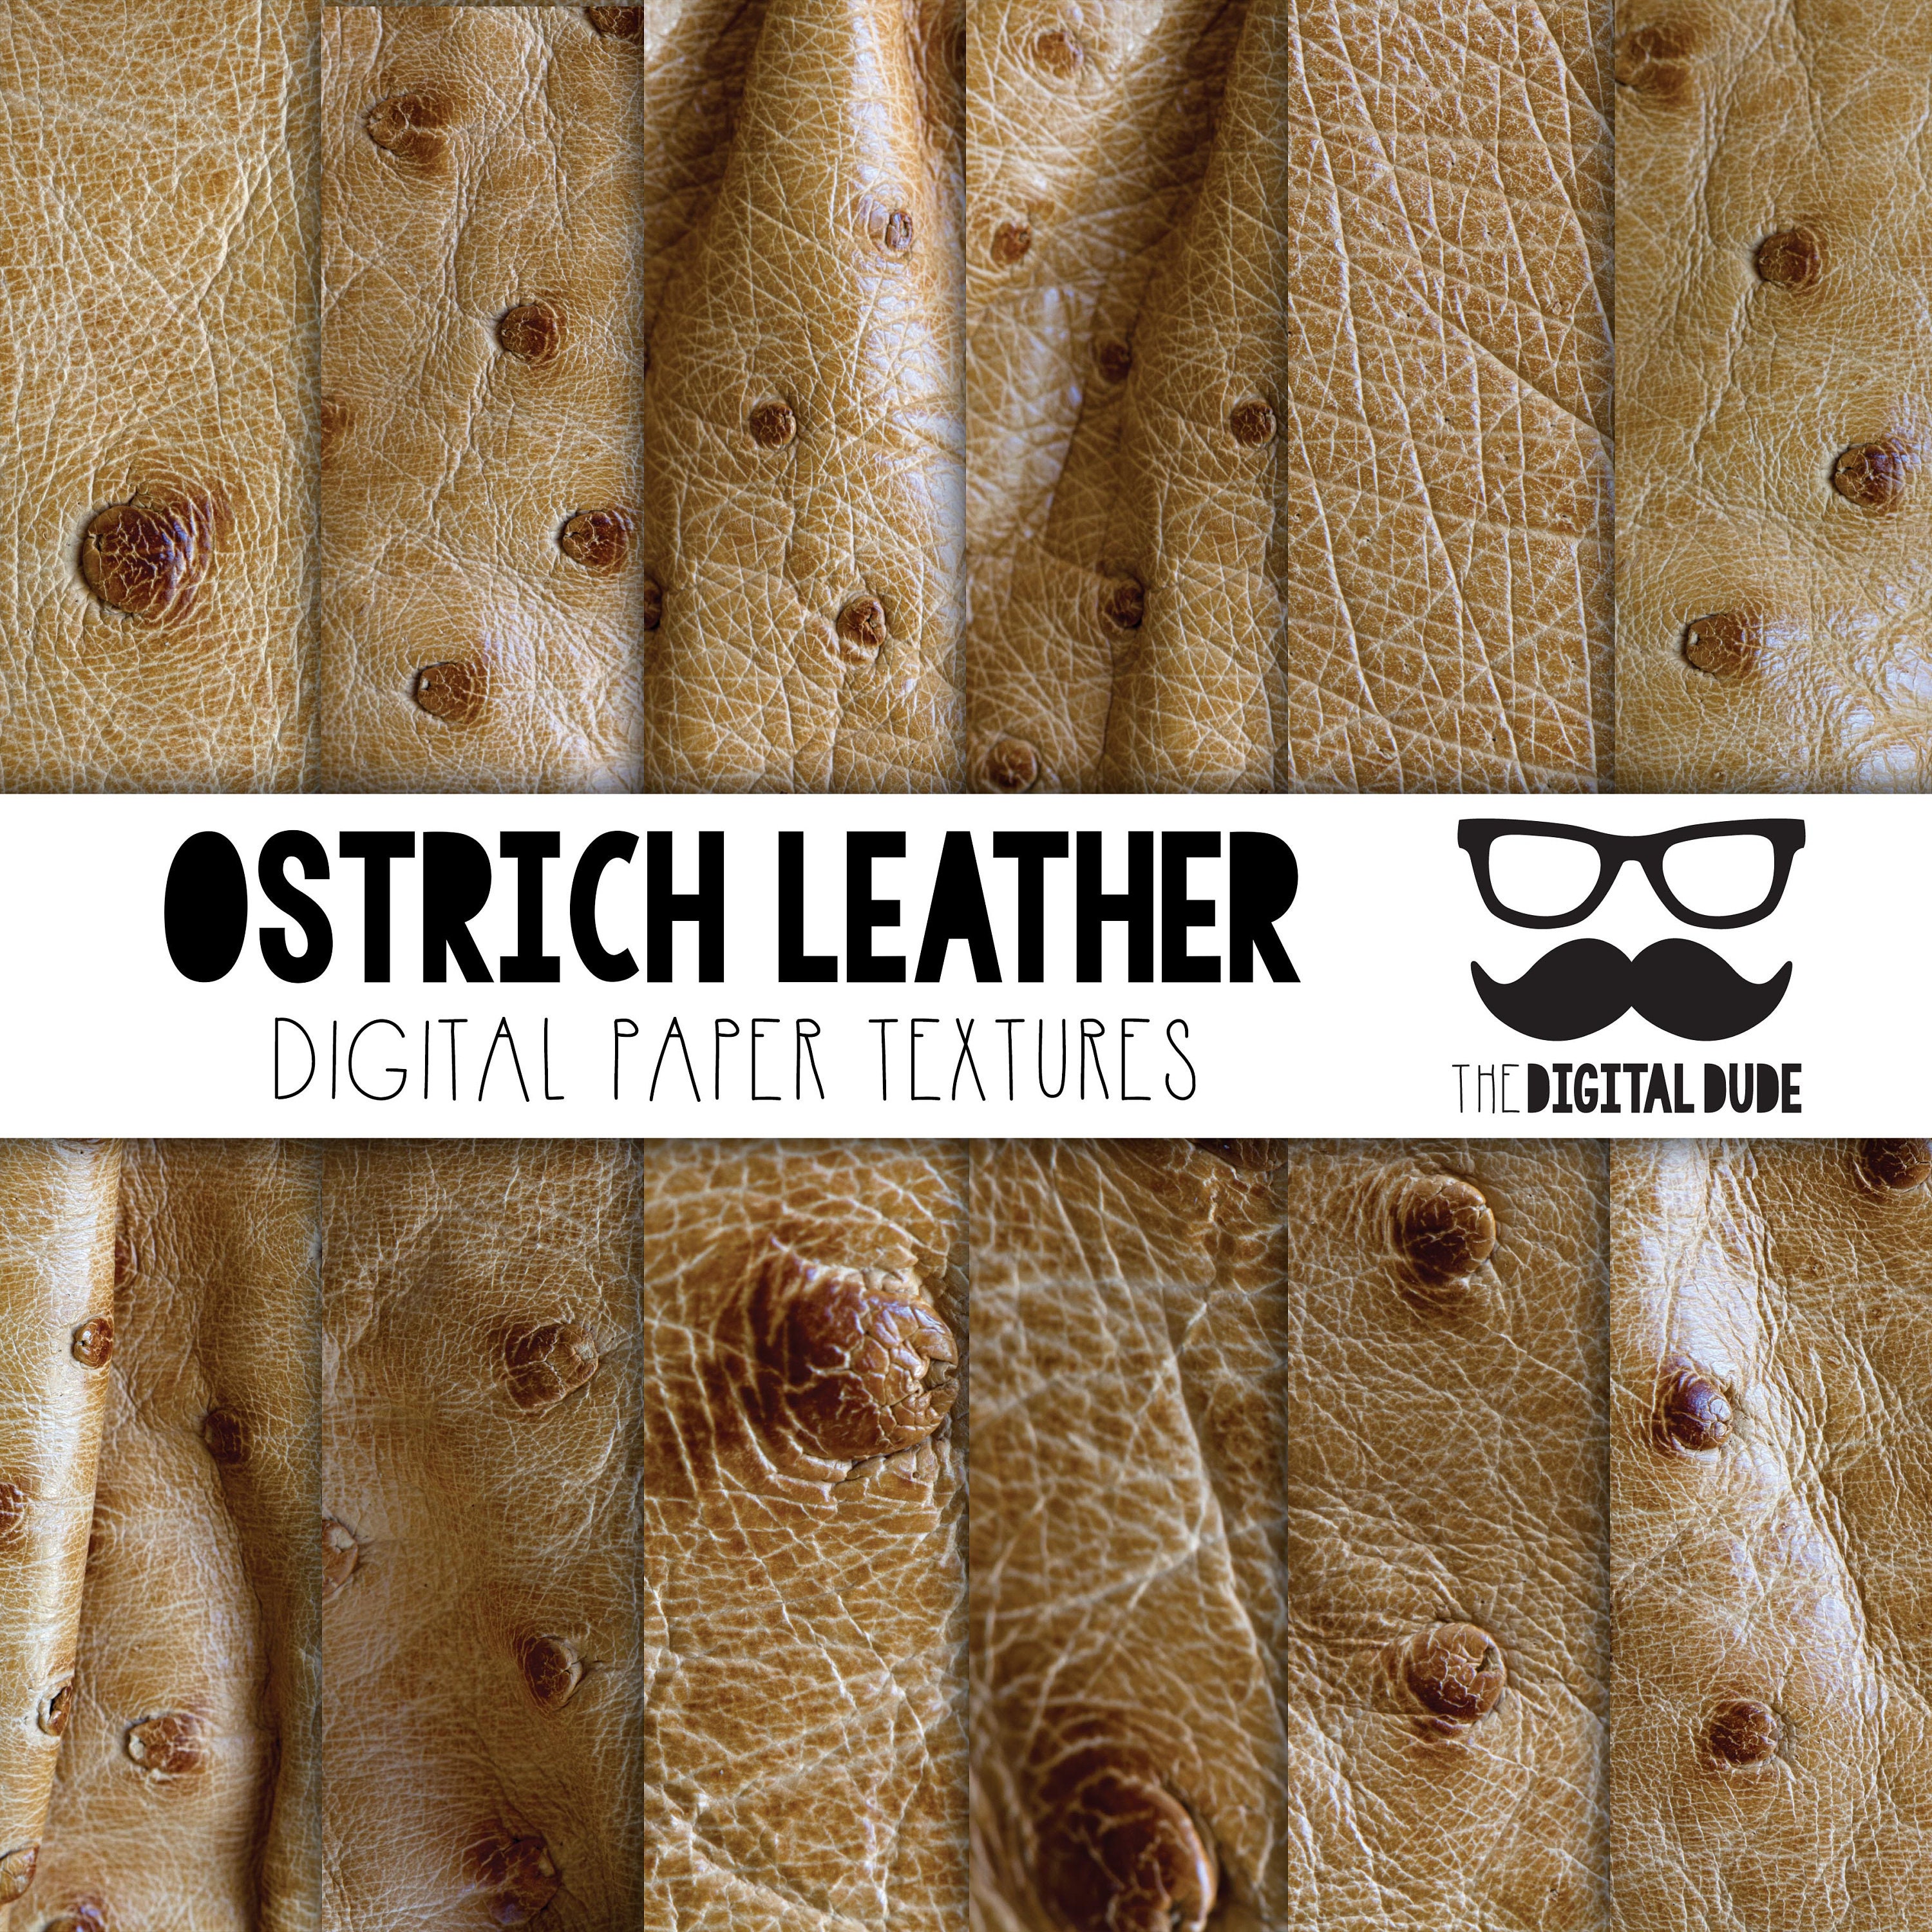 Genuine leather hide calfskin cowhide ostrich embossed cream/beige/light  blue italian skin for crafting